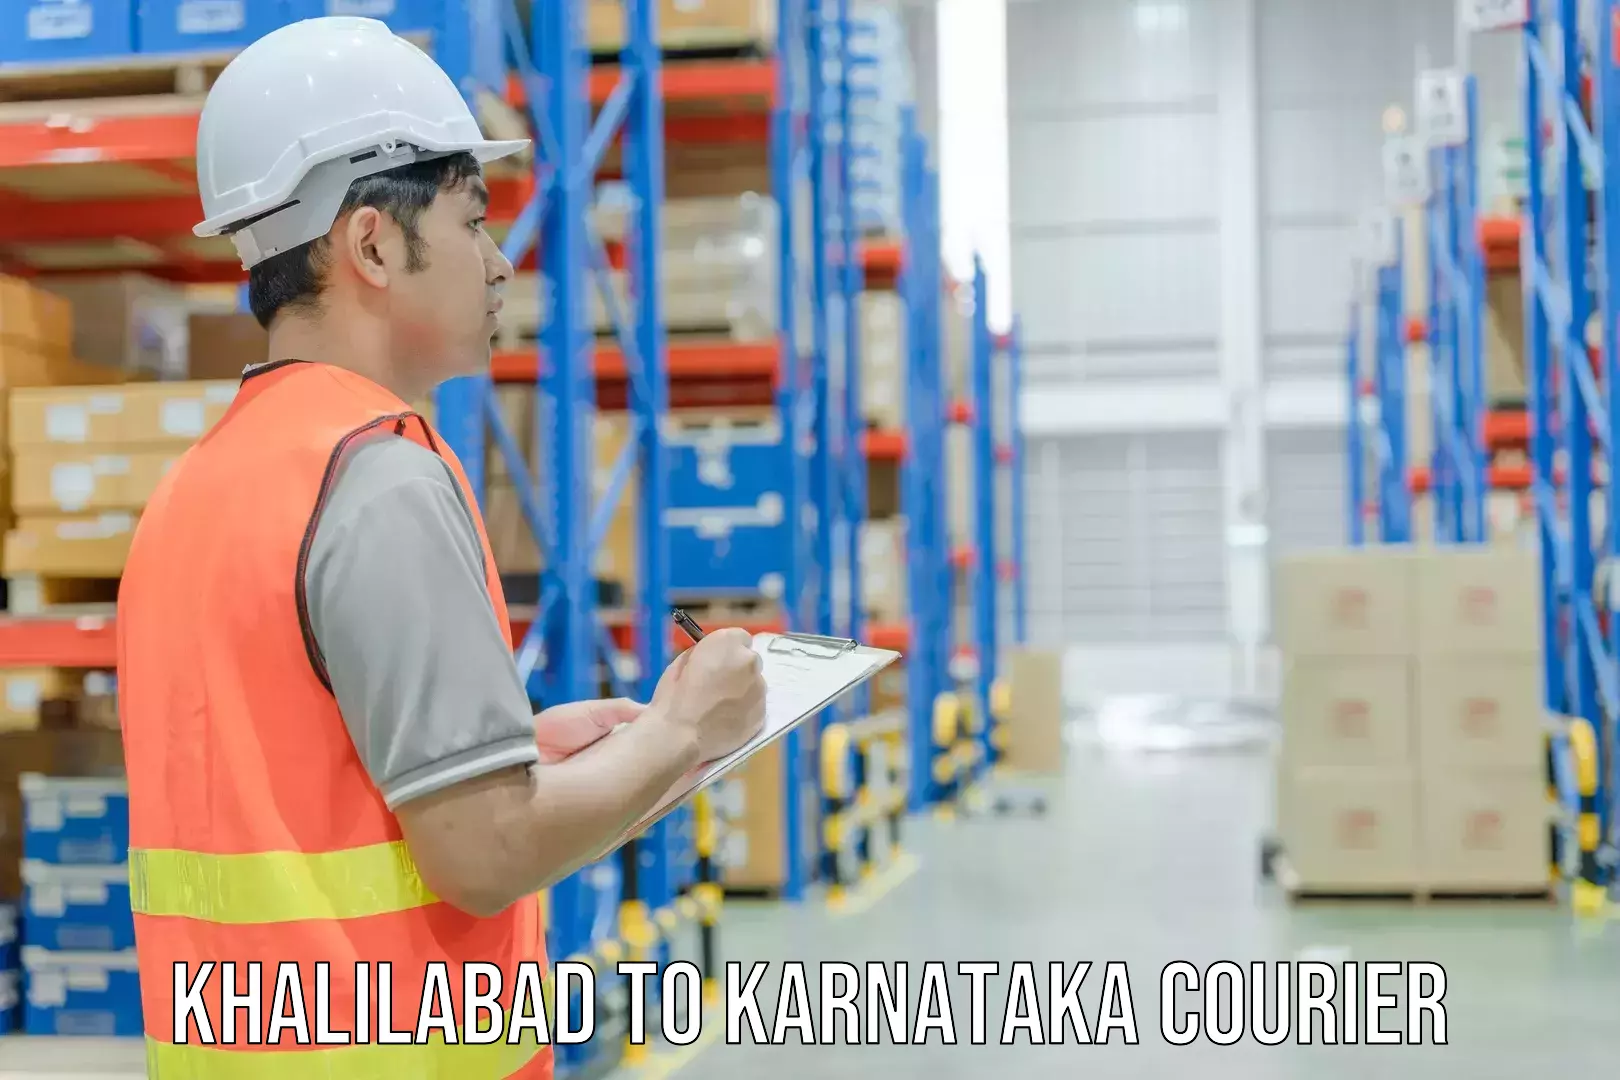 Flexible delivery scheduling Khalilabad to Karnataka